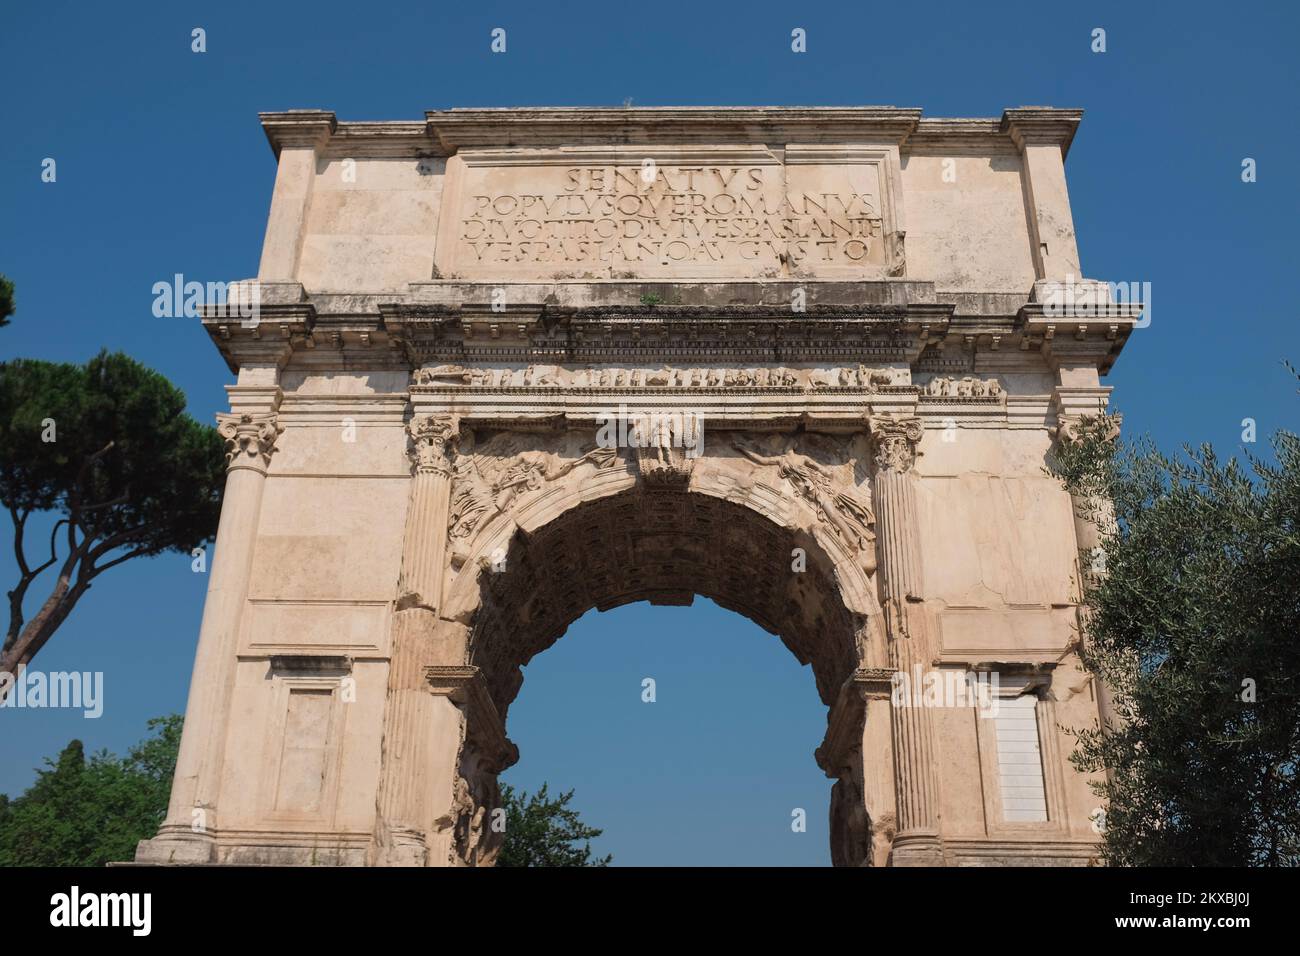 Rome, Italy - Arch of Titus ruins along the Via Sacra in the Roman Forum. Ancient structure celebrating fall of Jerusalem. Symbol of Jewish diaspora. Stock Photo